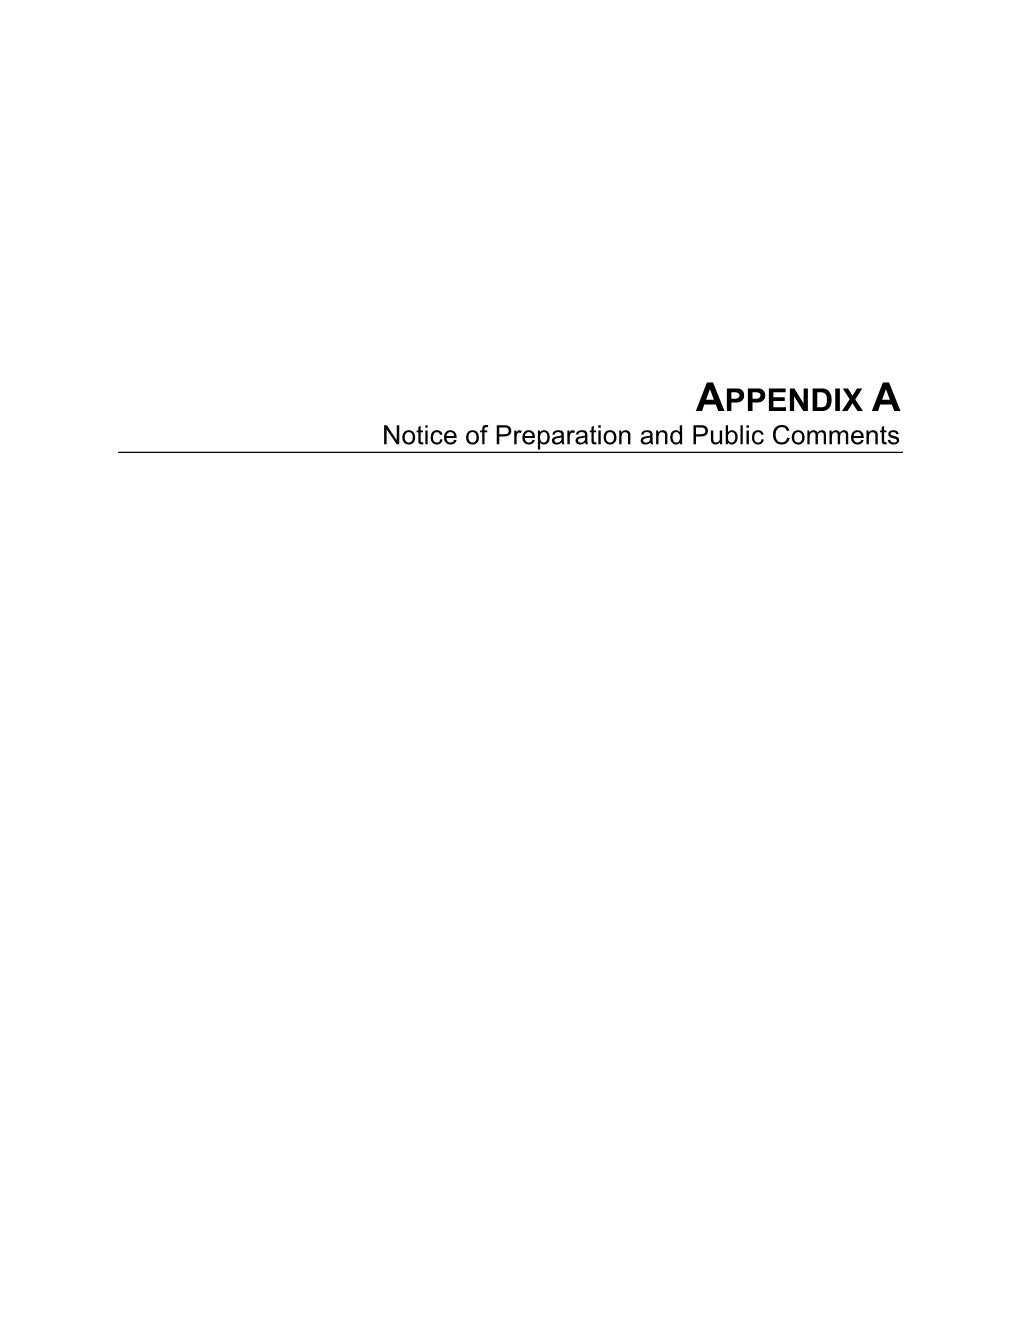 Appendix a NOP & Public Comments.Pdf